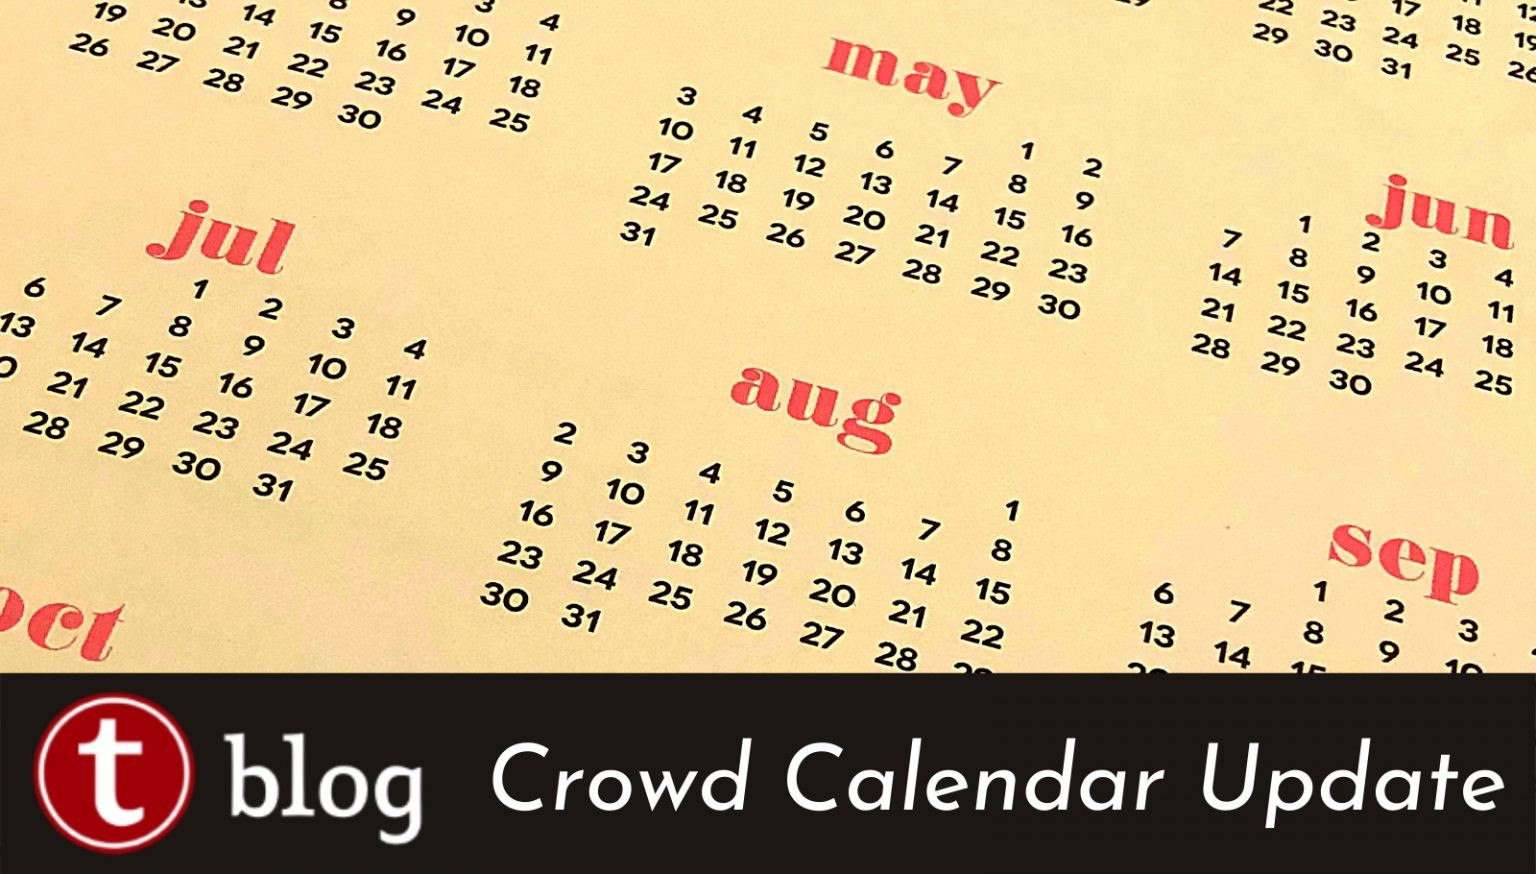 Wdw Crowd Calendar Update For Summer 2021 - Touringplans Blog-Disney World Crowd Calendar 2022 By Park